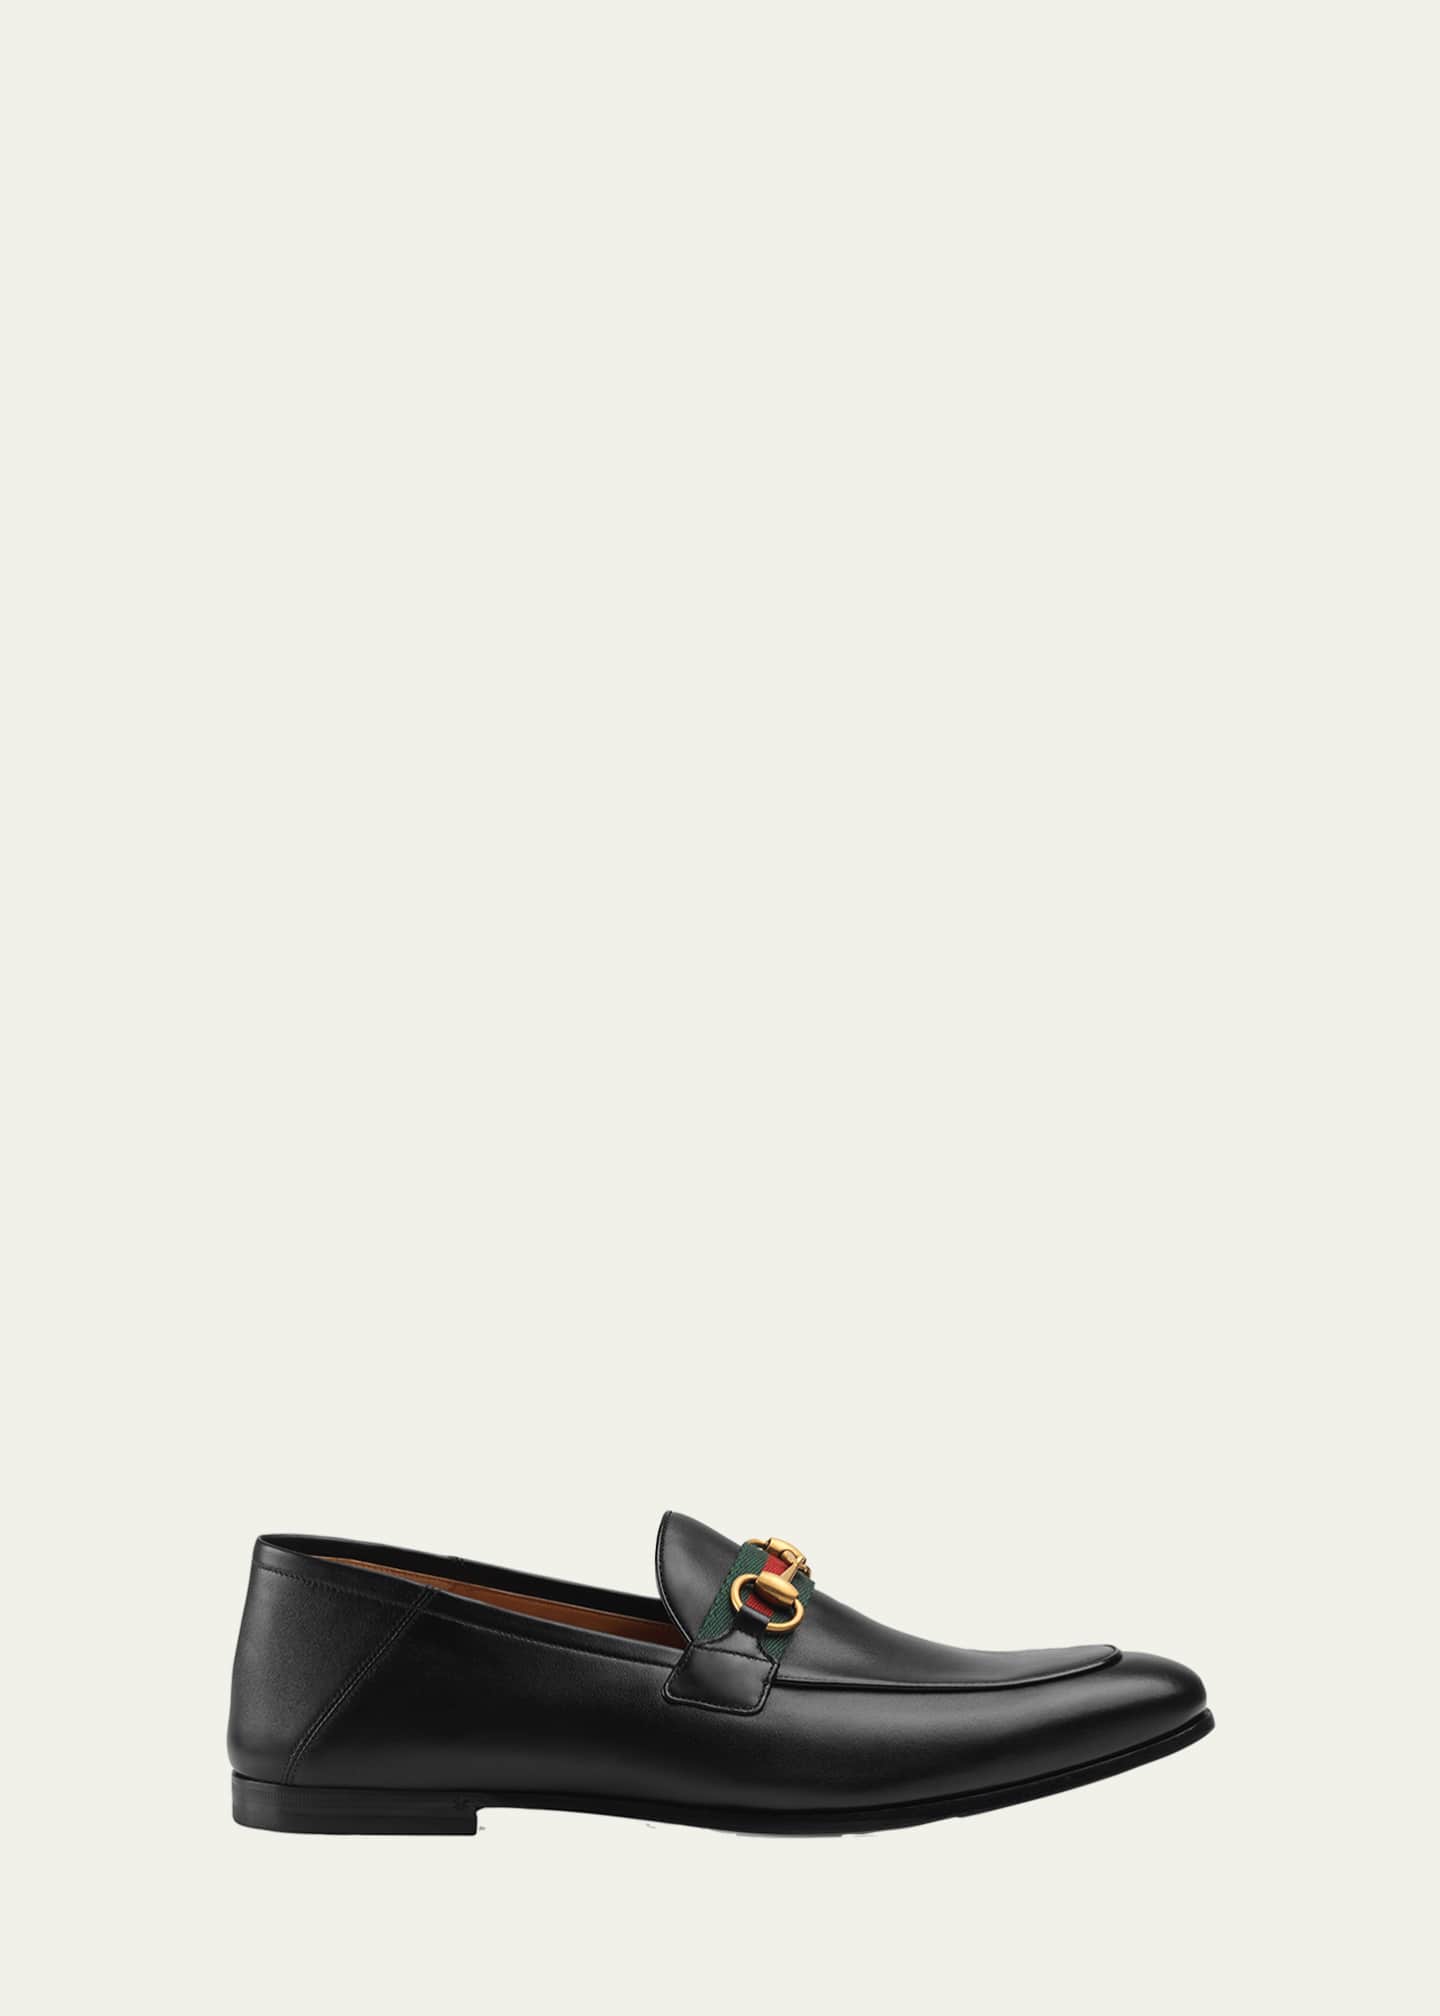 Gucci Men's Web Brixton Leather Loafers - Black - Size 12